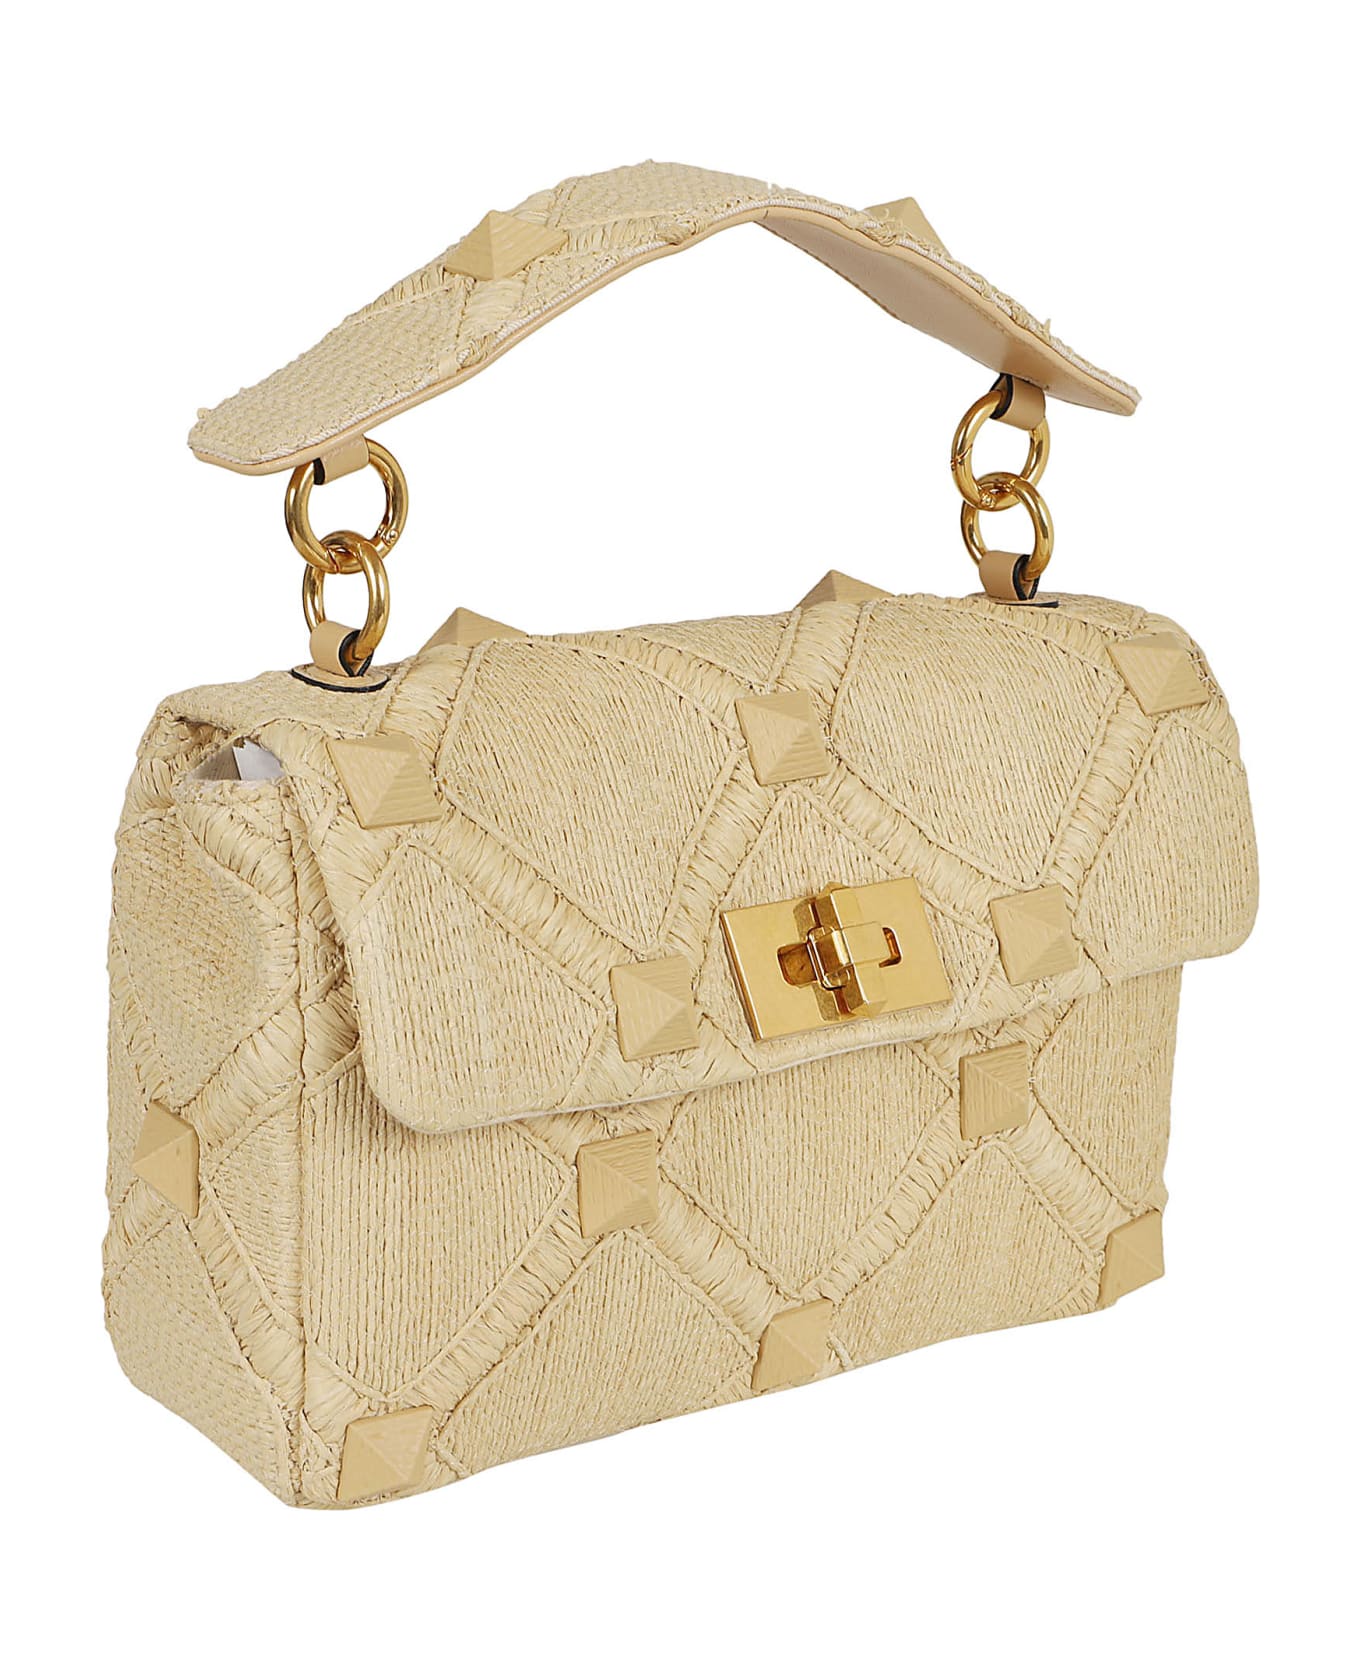 Valentino Garavani Shoulder Bag Roman Stud - Christian Dior Lady Dior Micro Bag